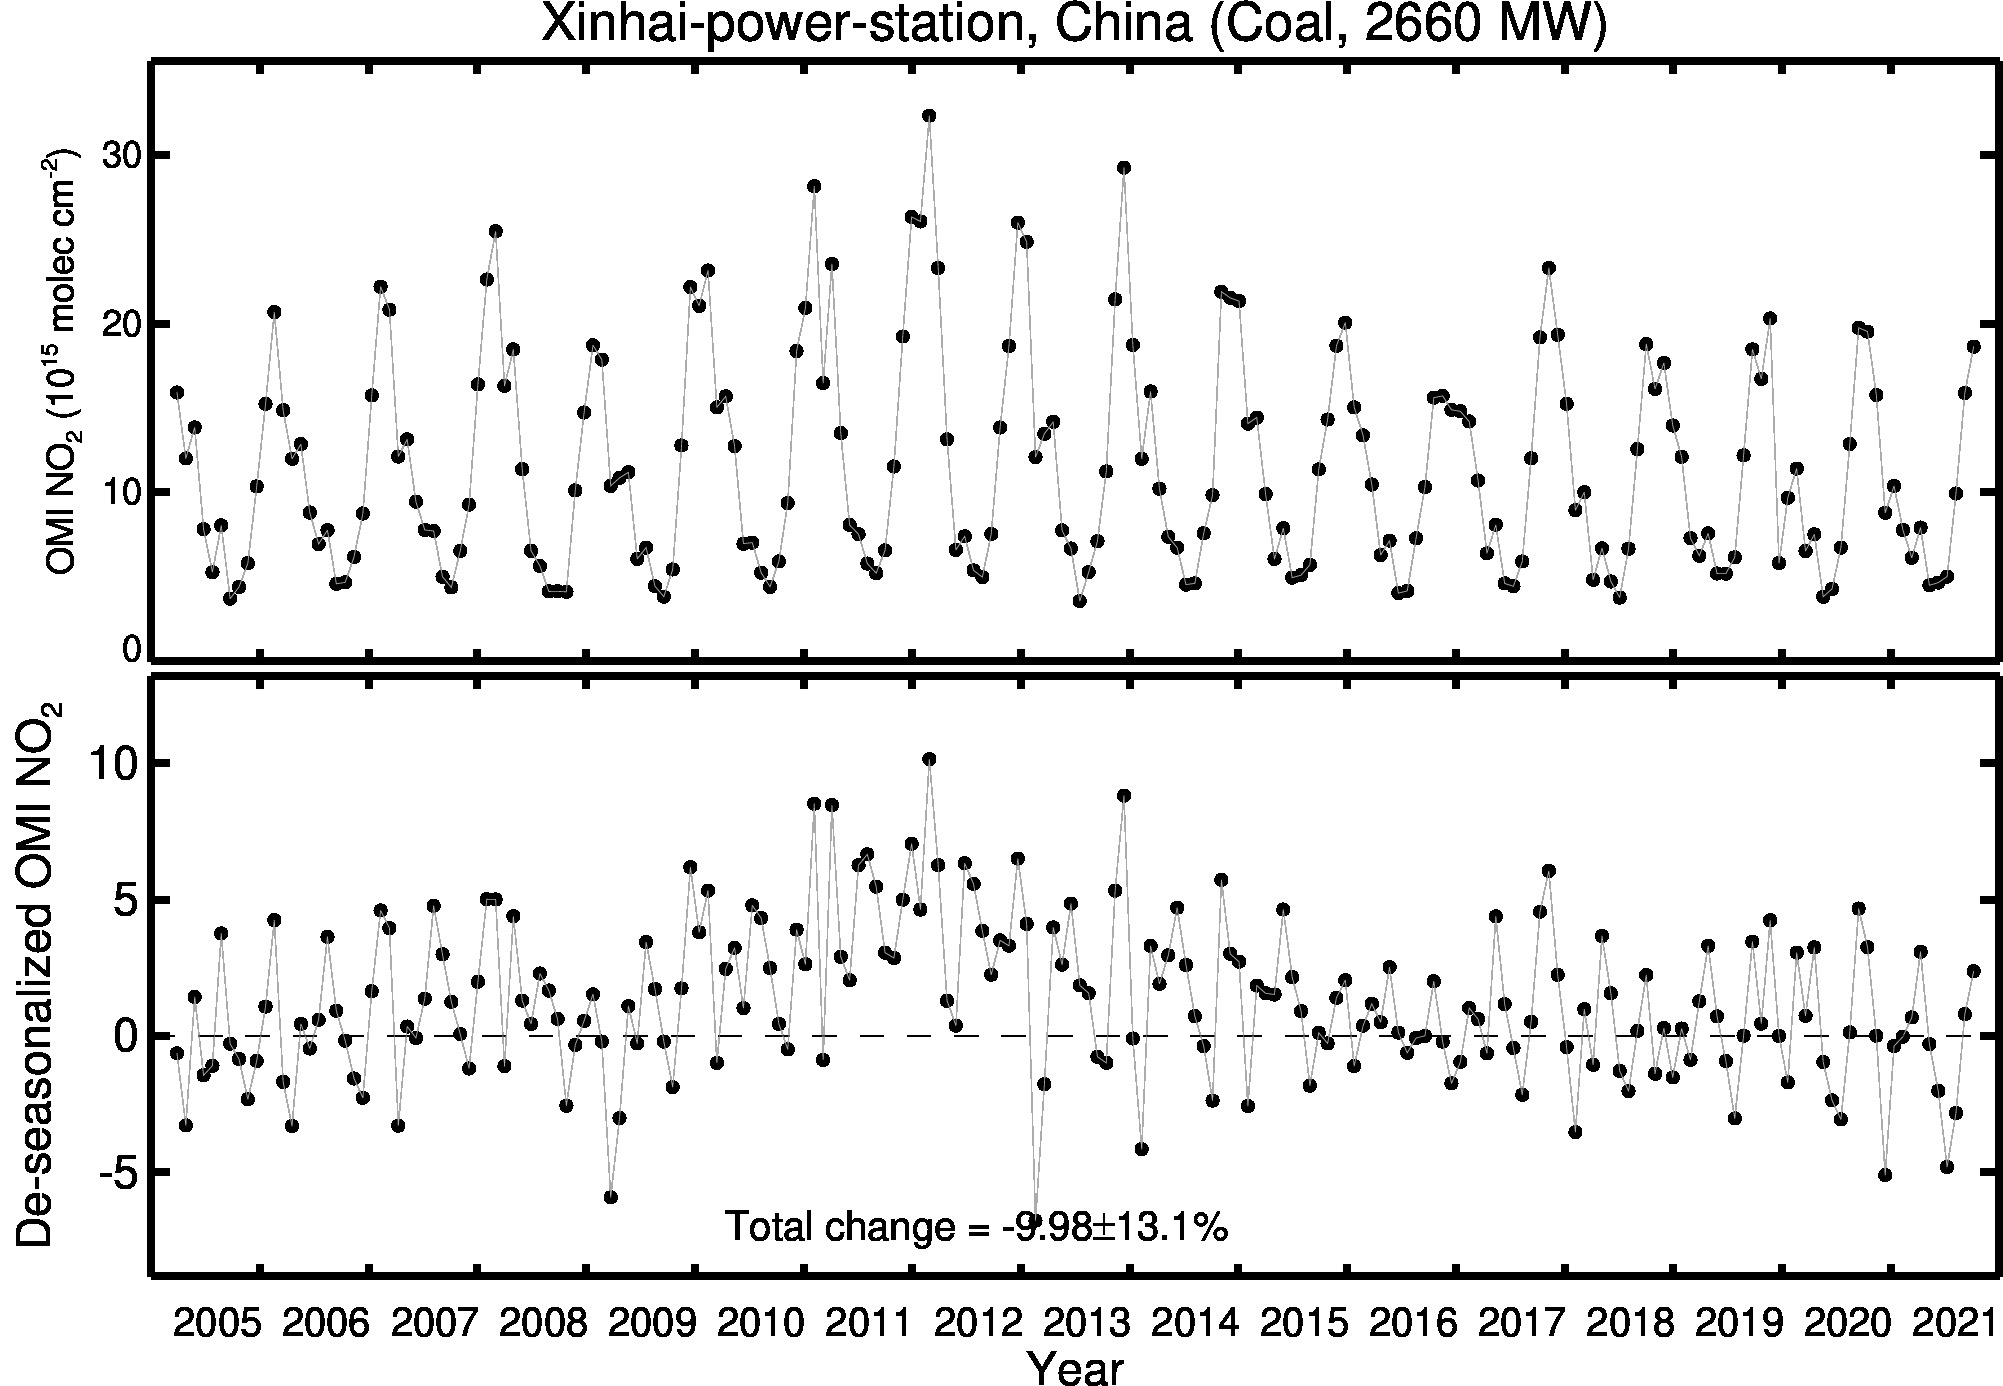 Xinhai power station Line Plot 2005-2021